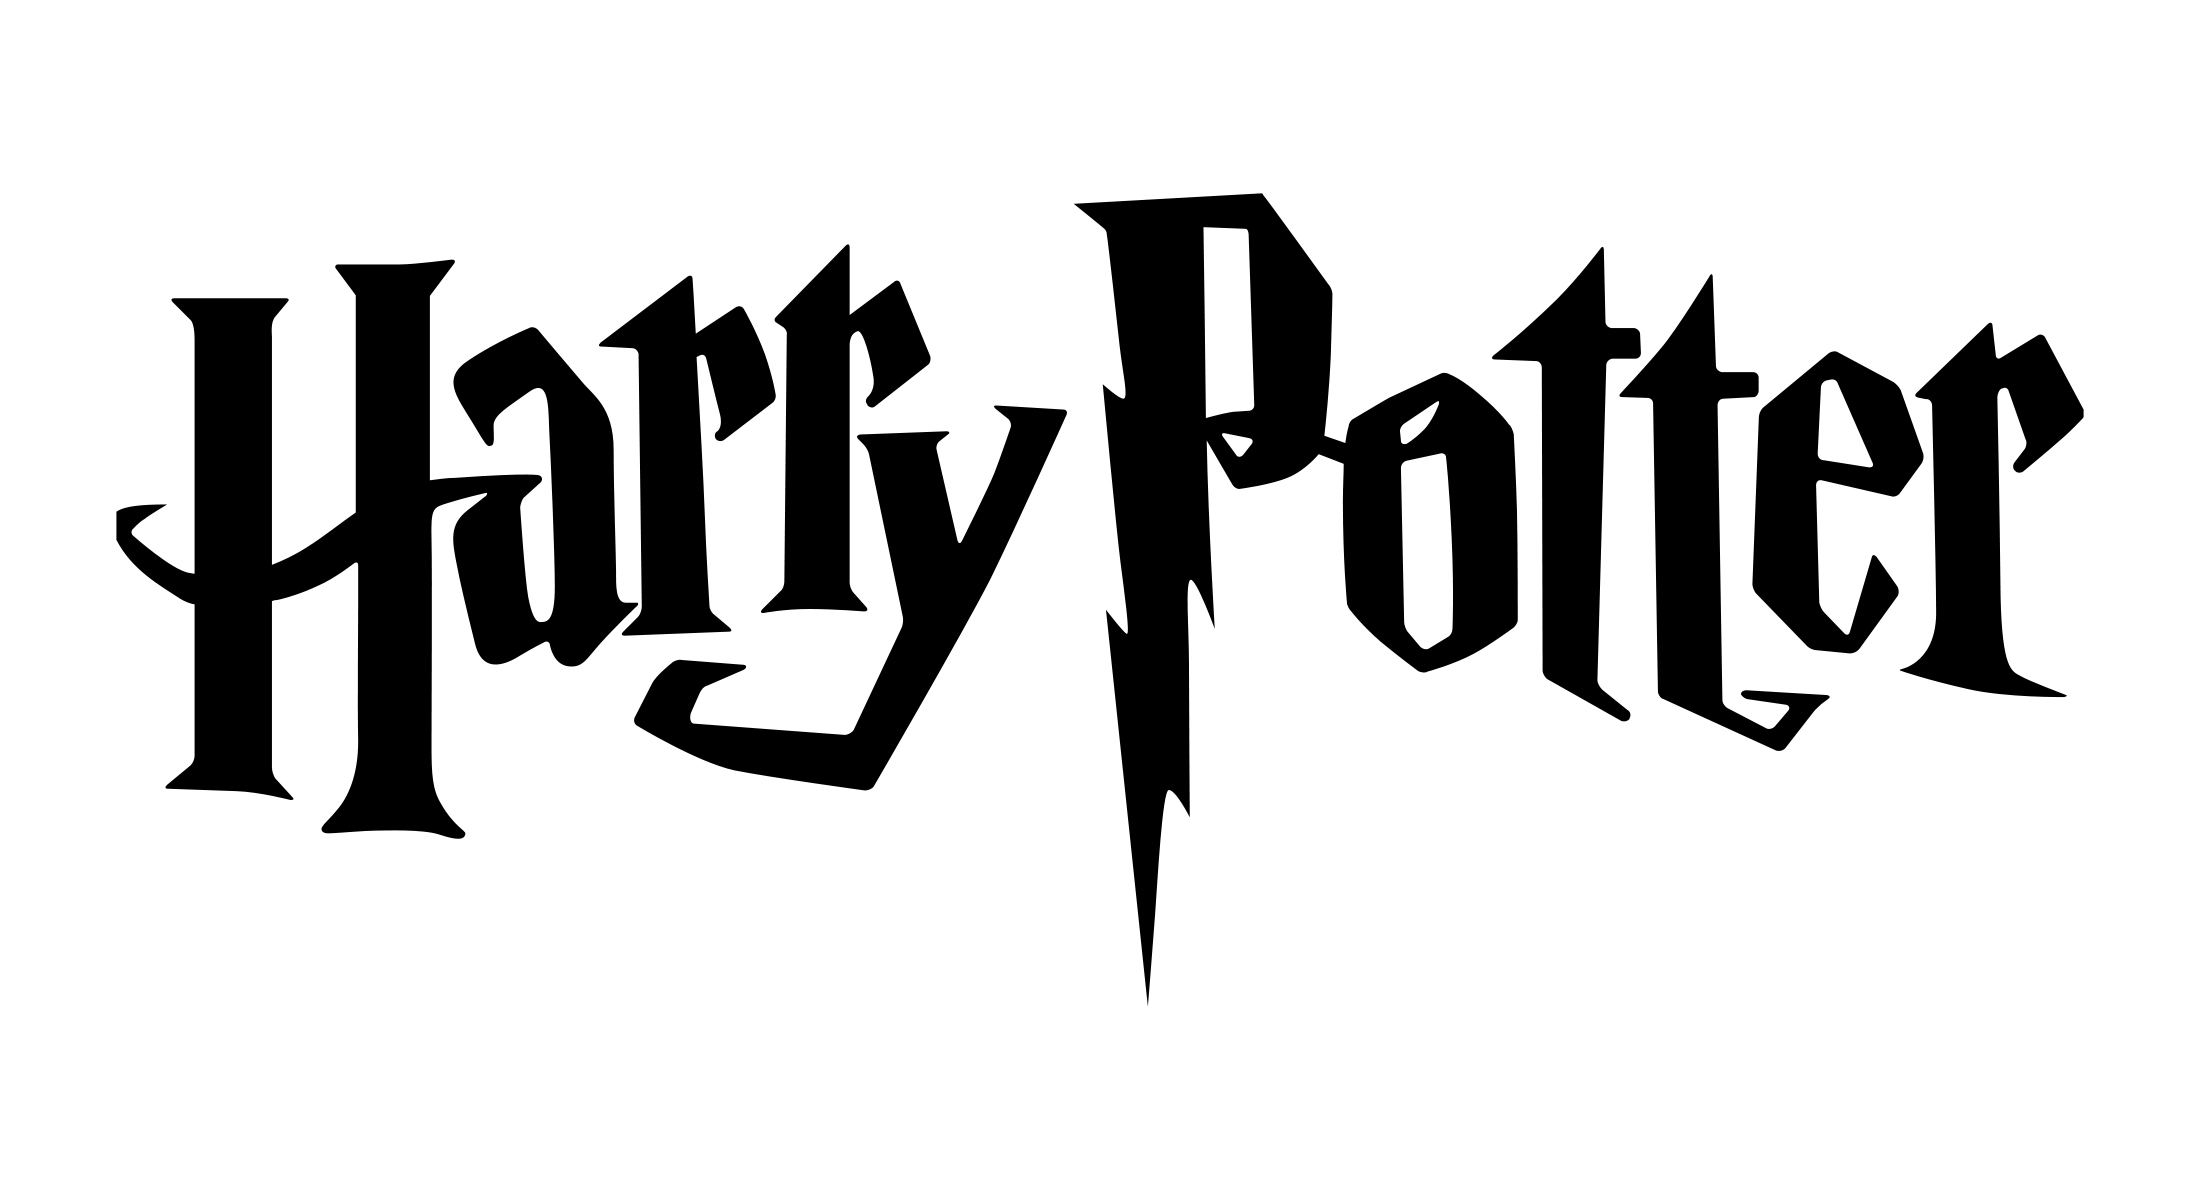 harry-potter-logo-harry-potter-symbol-meaning-history-and-evolution